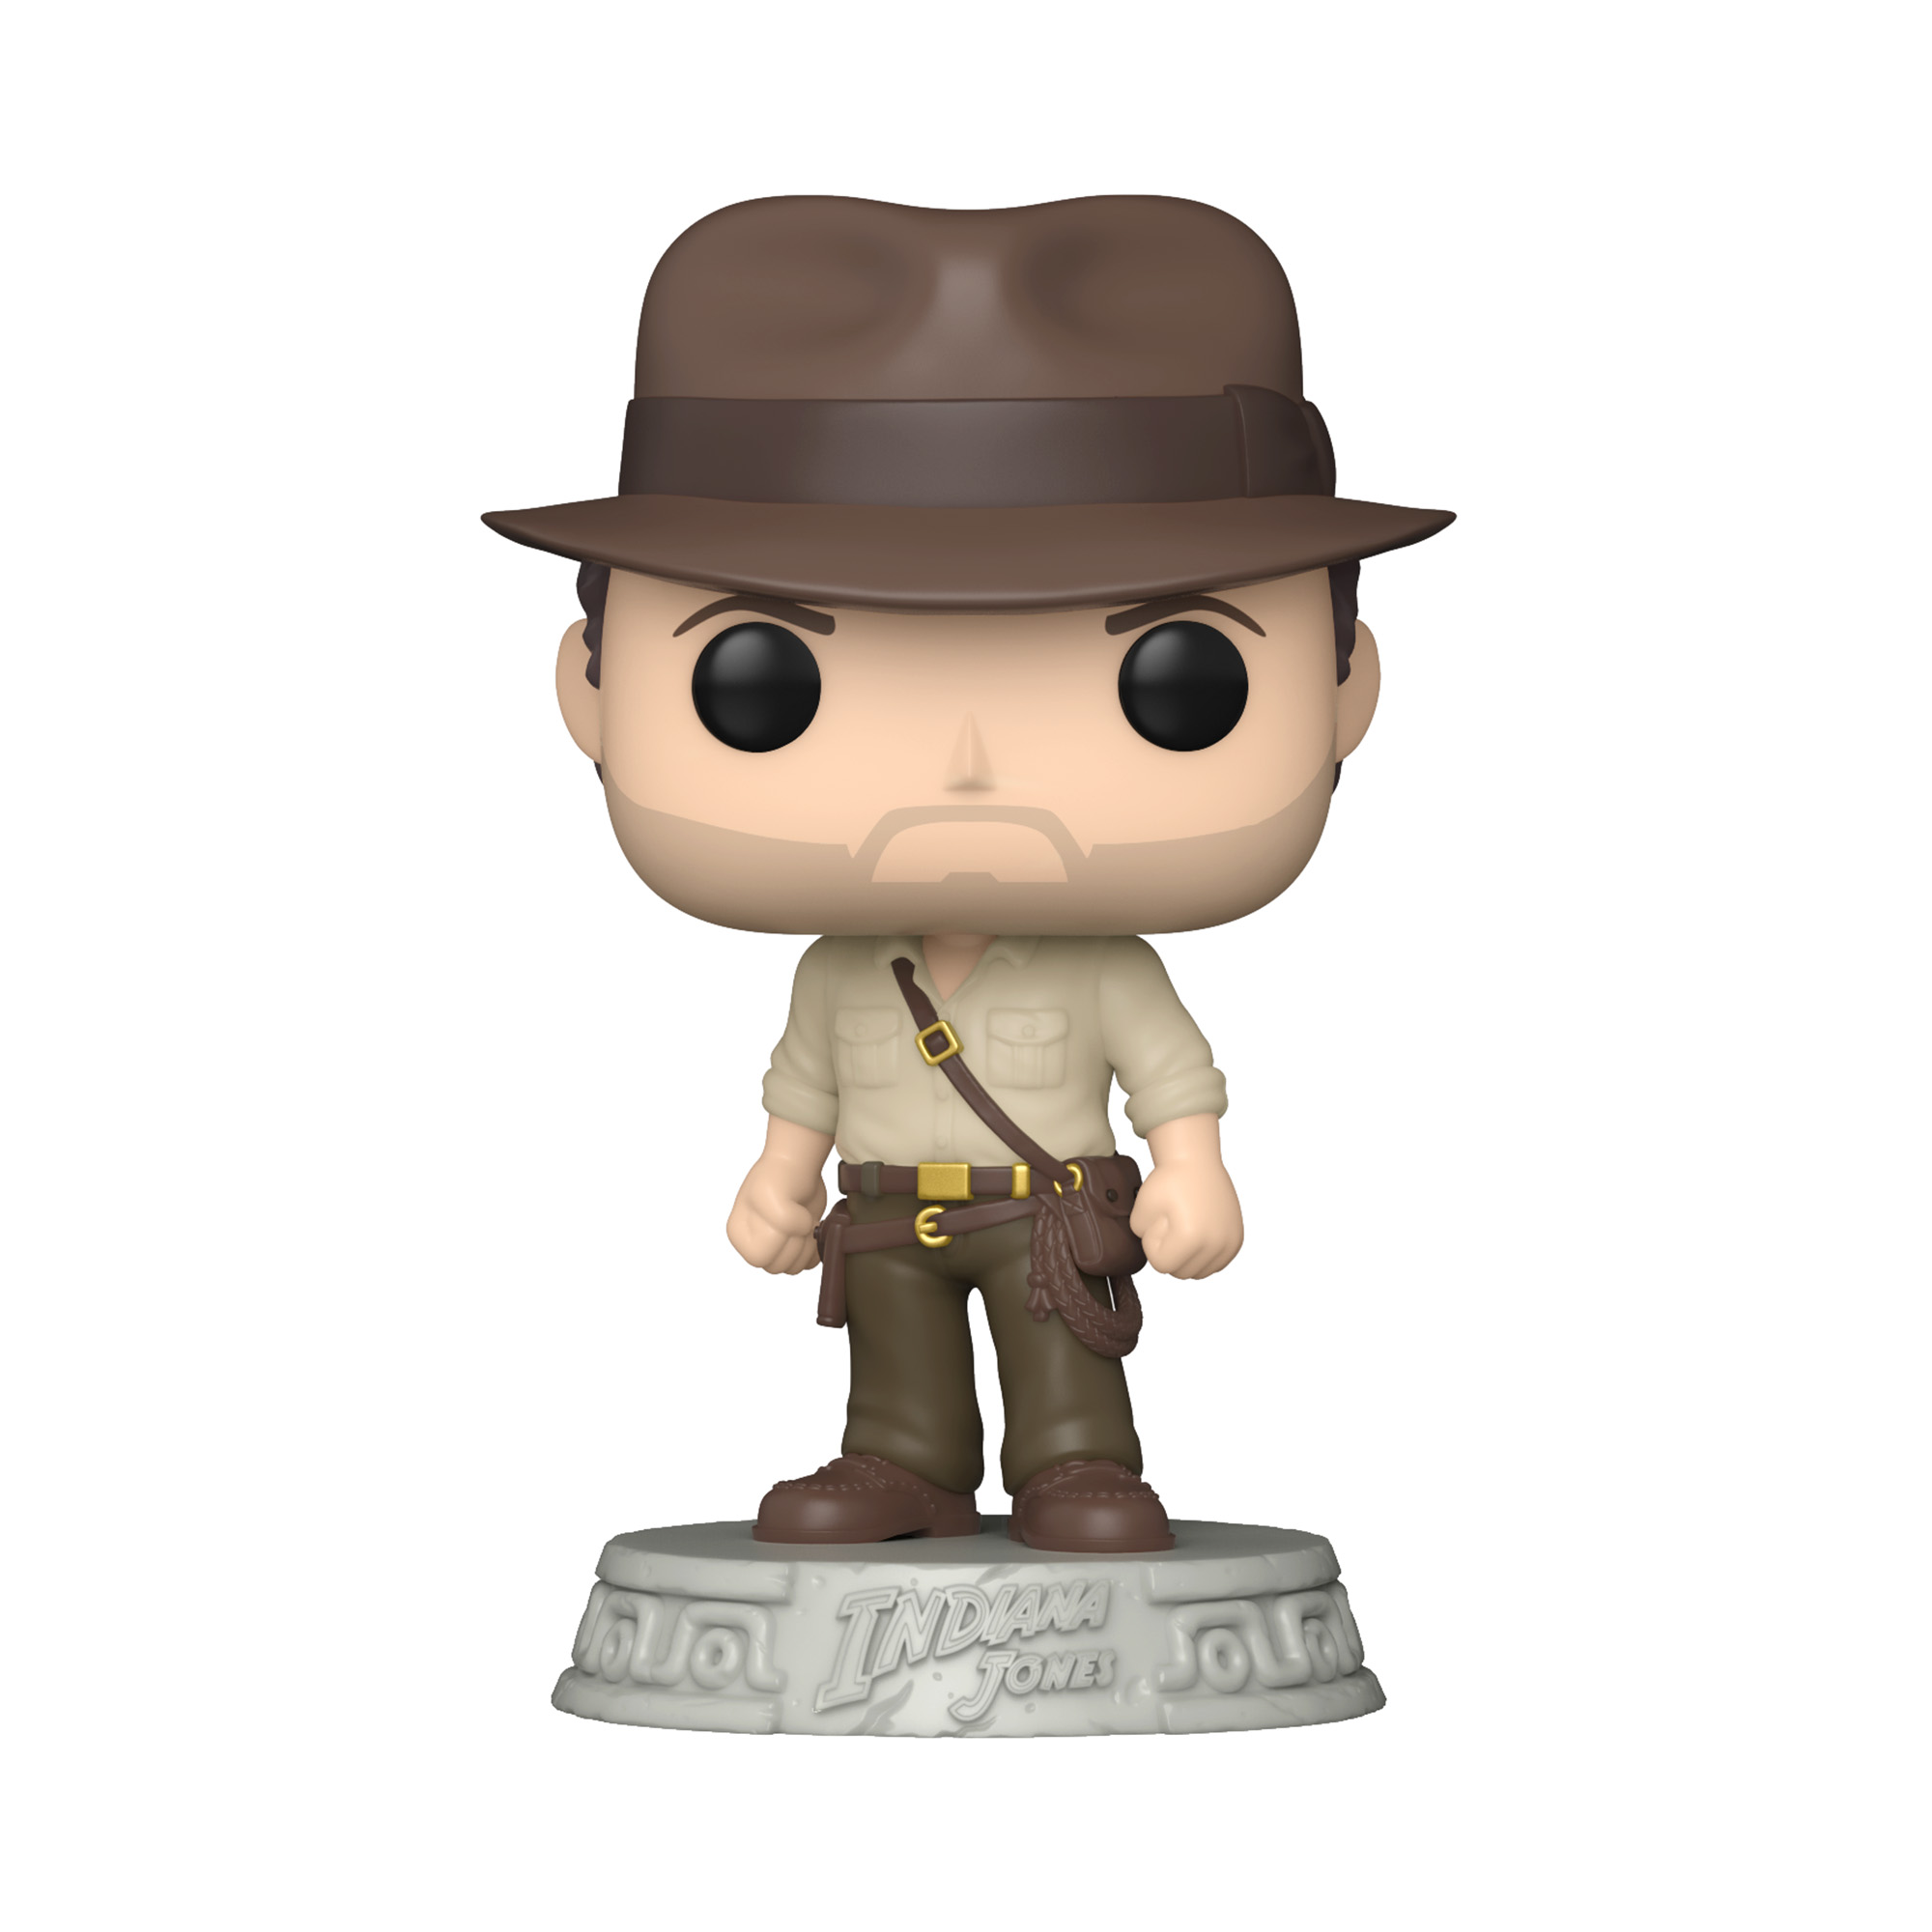 Indiana Jones collectible bobblehead